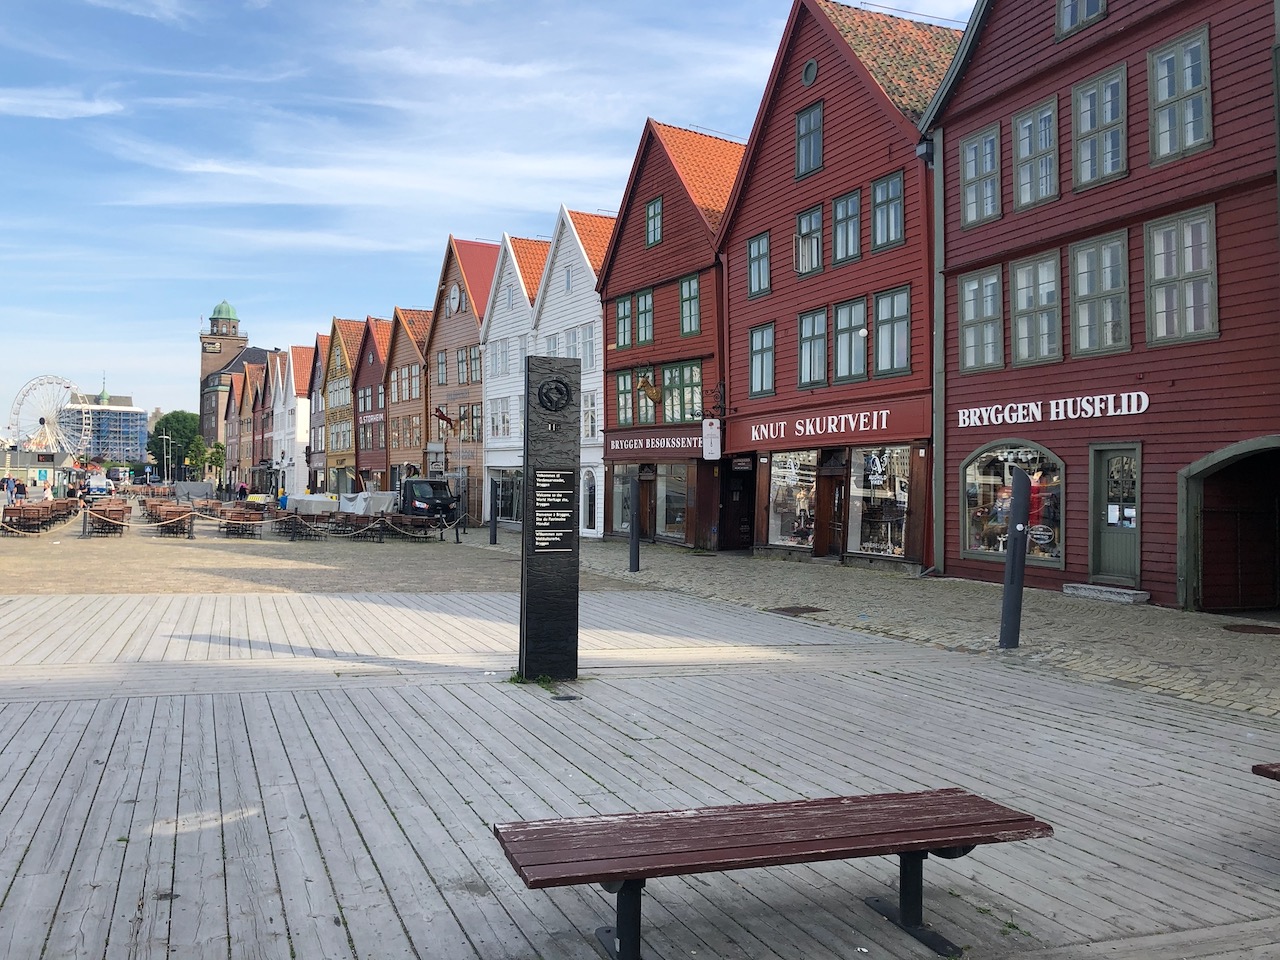 Bryggen in Bergen City Centre - Tours and Activities